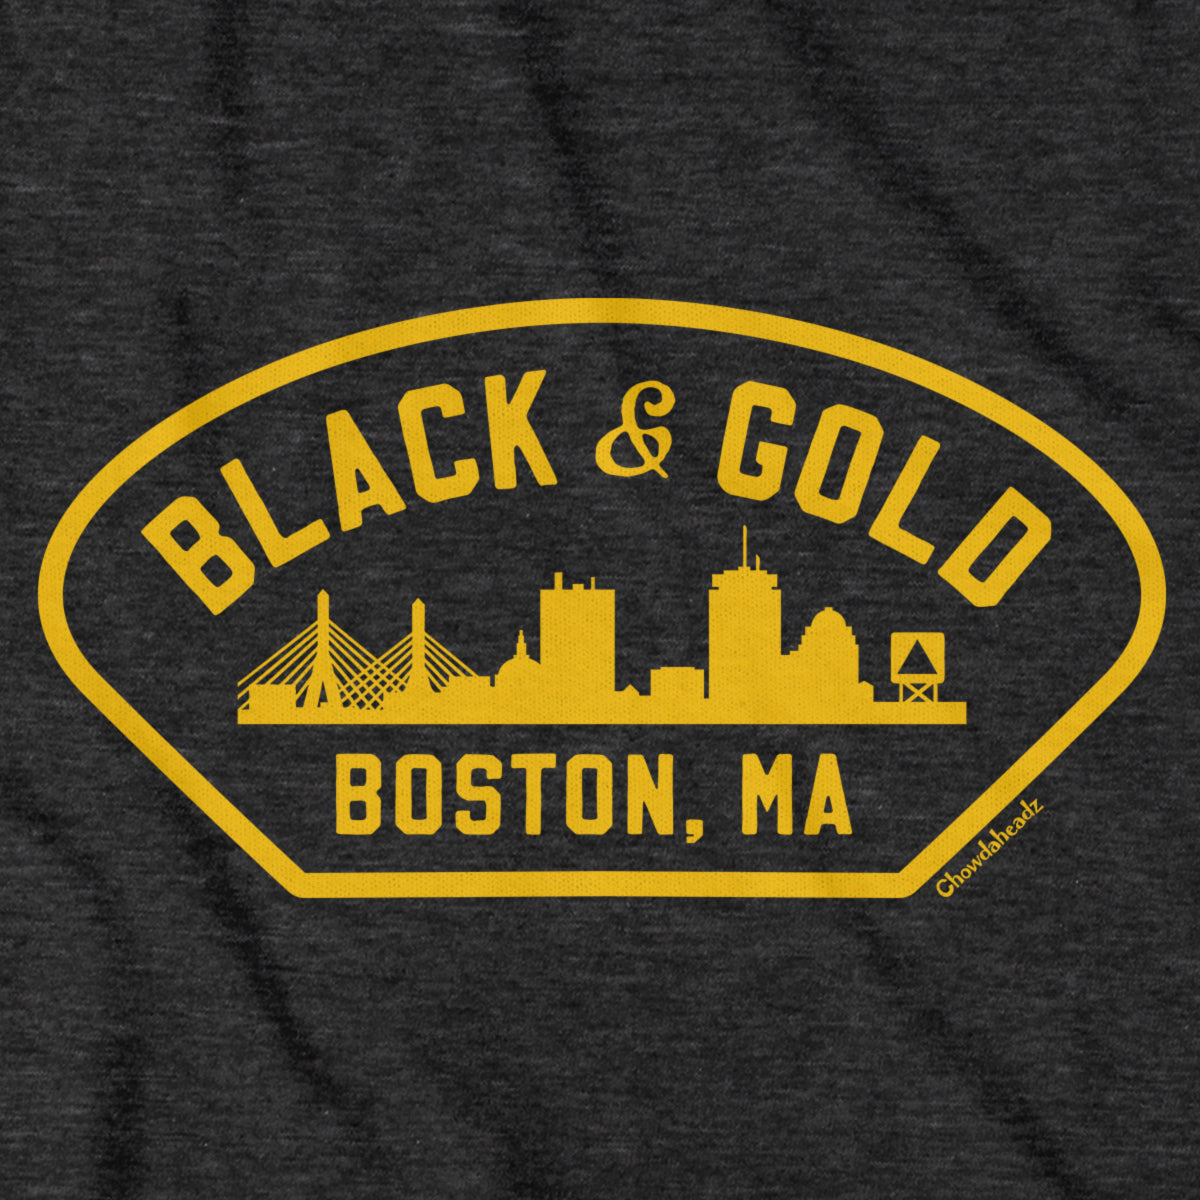 Black & Gold Boston Naval T-Shirt - Chowdaheadz